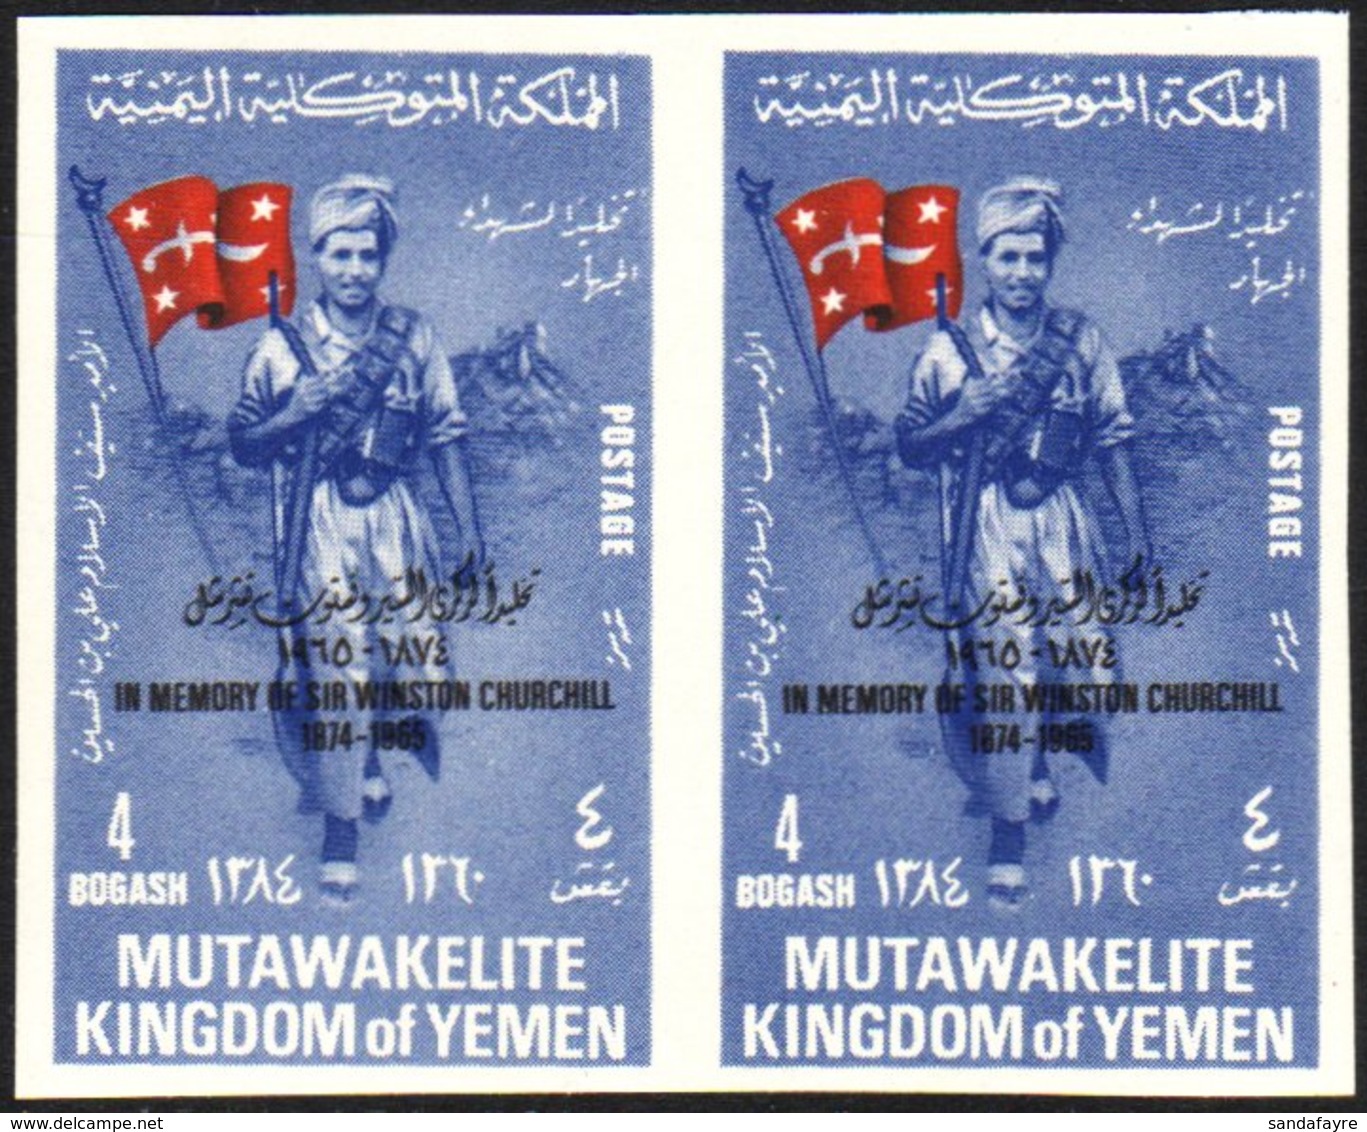 1965 Churchill Commemoration Opt On 4d Ultramarine & Red IMPERF PAIR, Mi 144Bb, Fresh Never Hinged Mint (2 Stamps) For M - Yemen